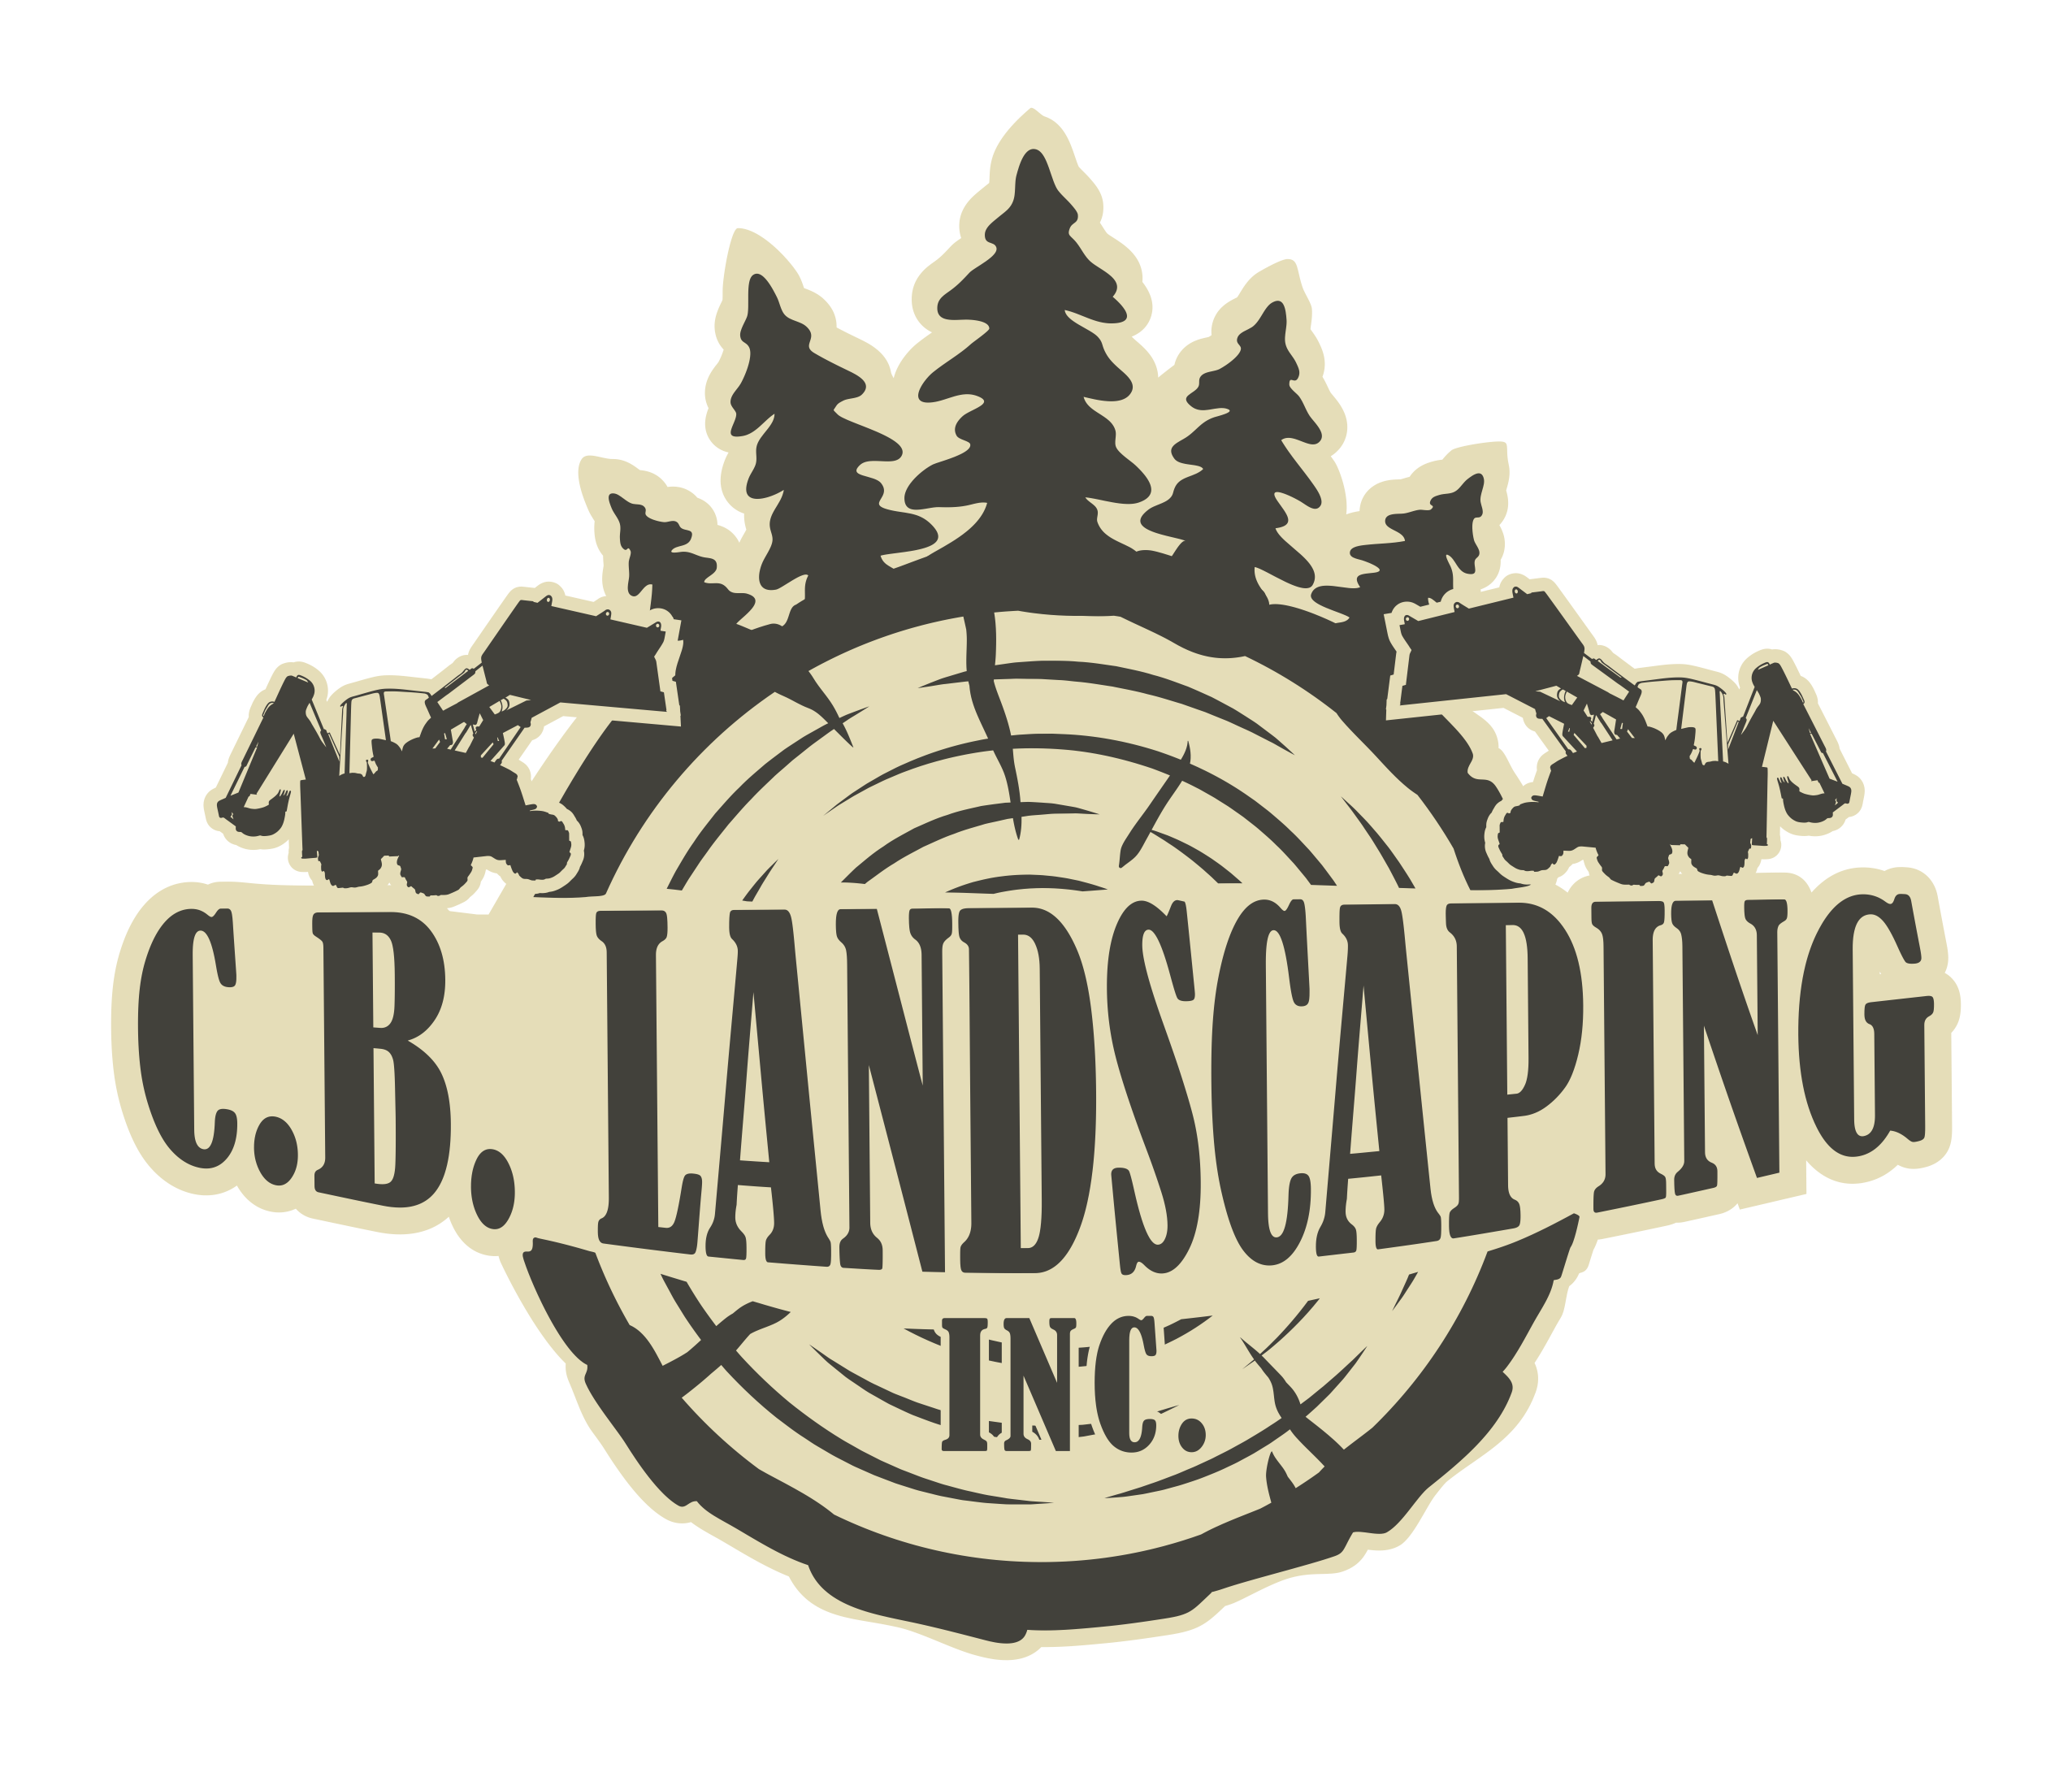 CB Landscaping Inc.